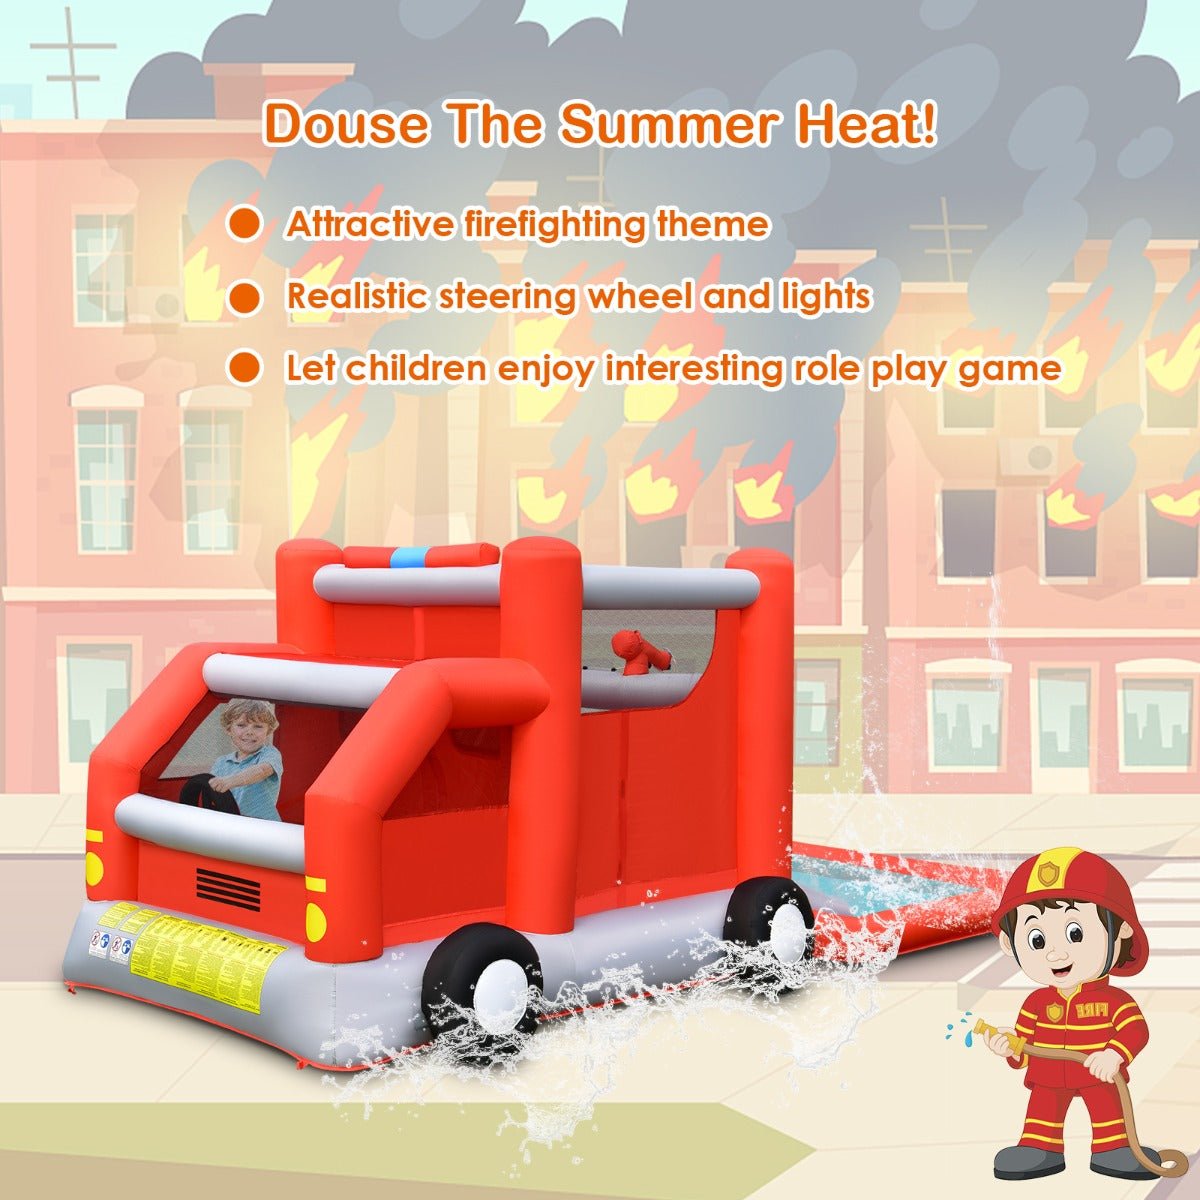 Kids Water Slide with Firefighting Theme - Splash and Blower Thrills